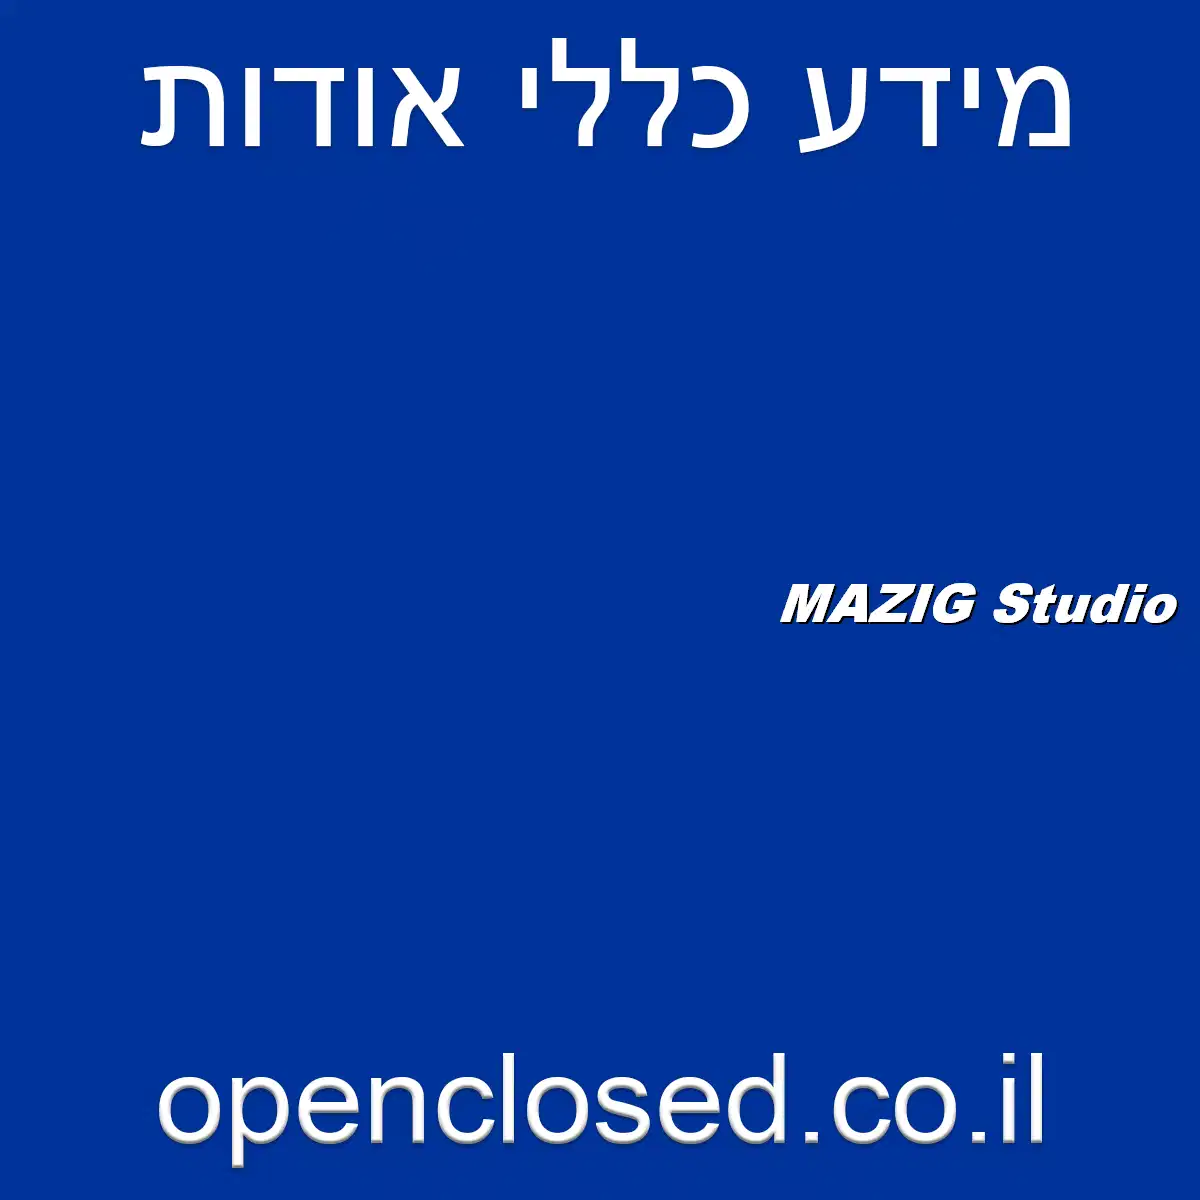 MAZIG Studio